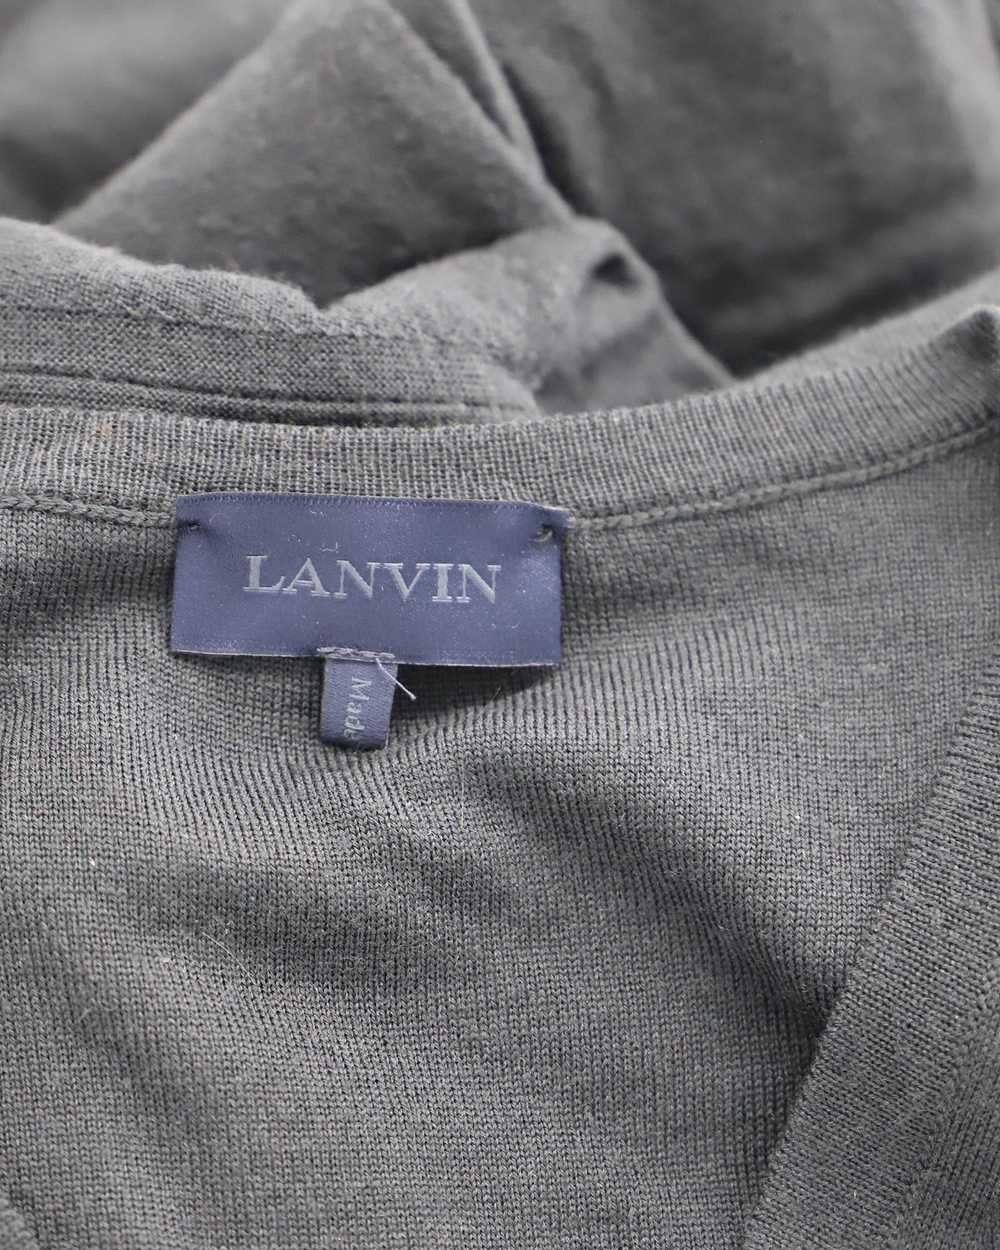 Lanvin Grey Merino Wool V-Neck Sweater for Men - image 3